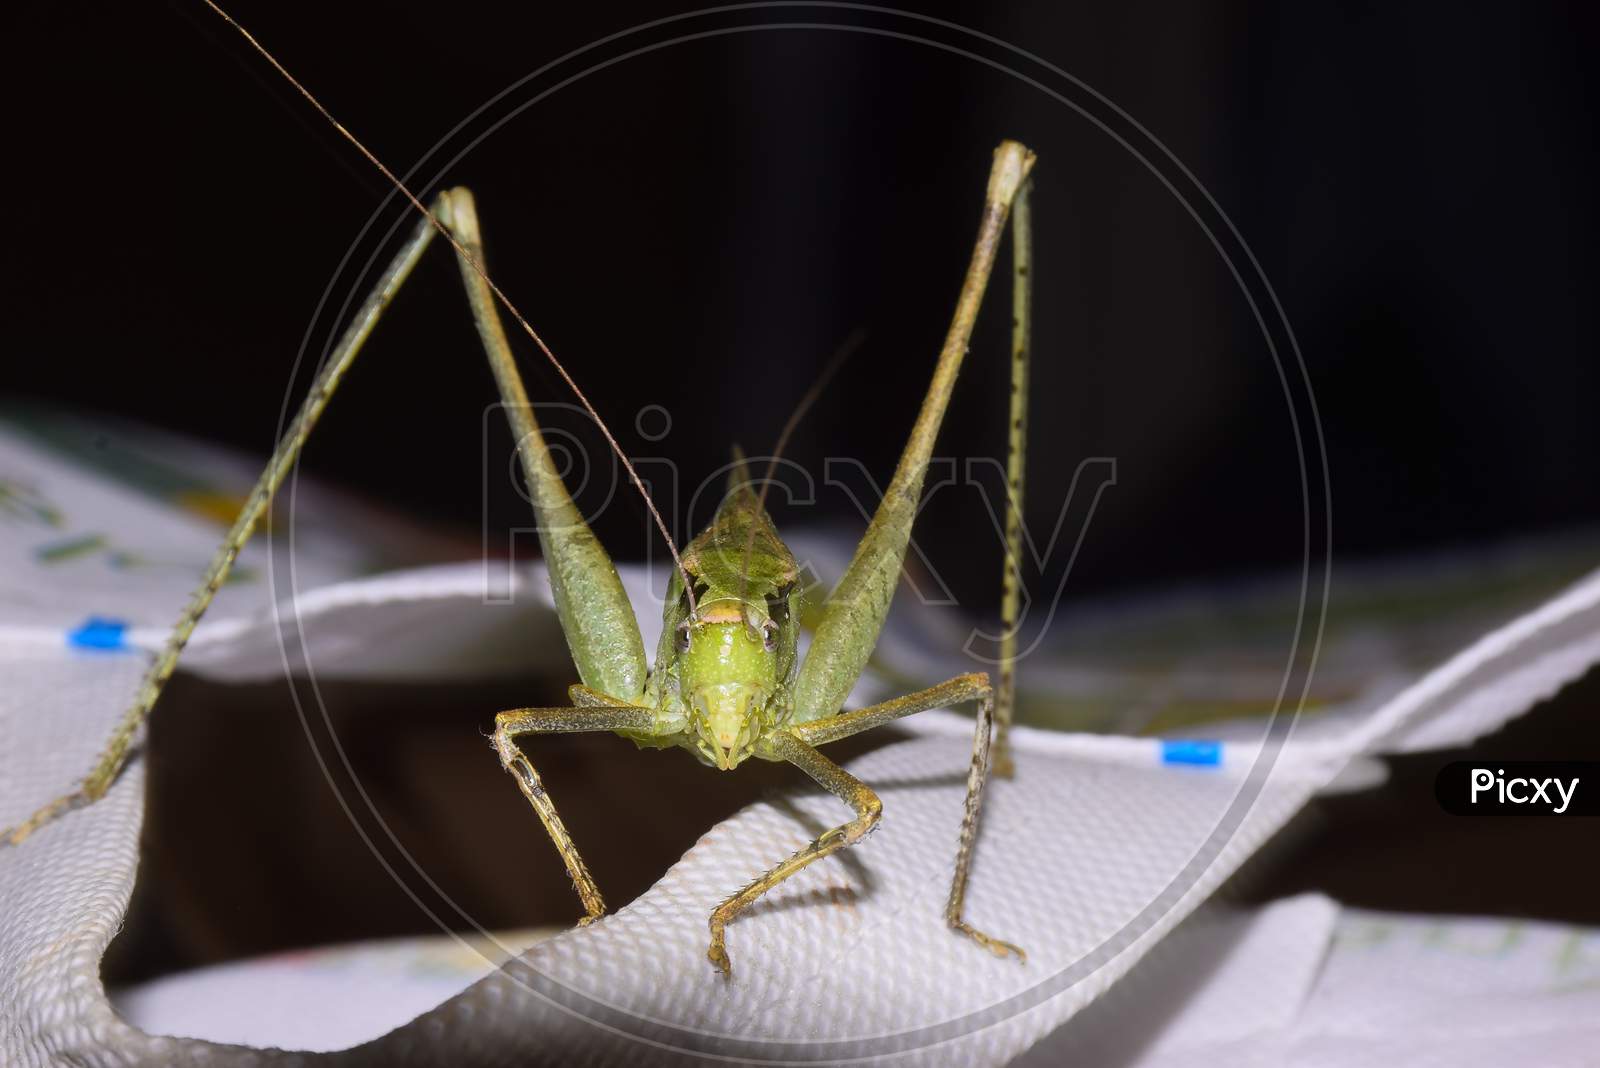 Close-Up Focus Stacked Image Of A Young Carolina Praying Mantis On White Bag.